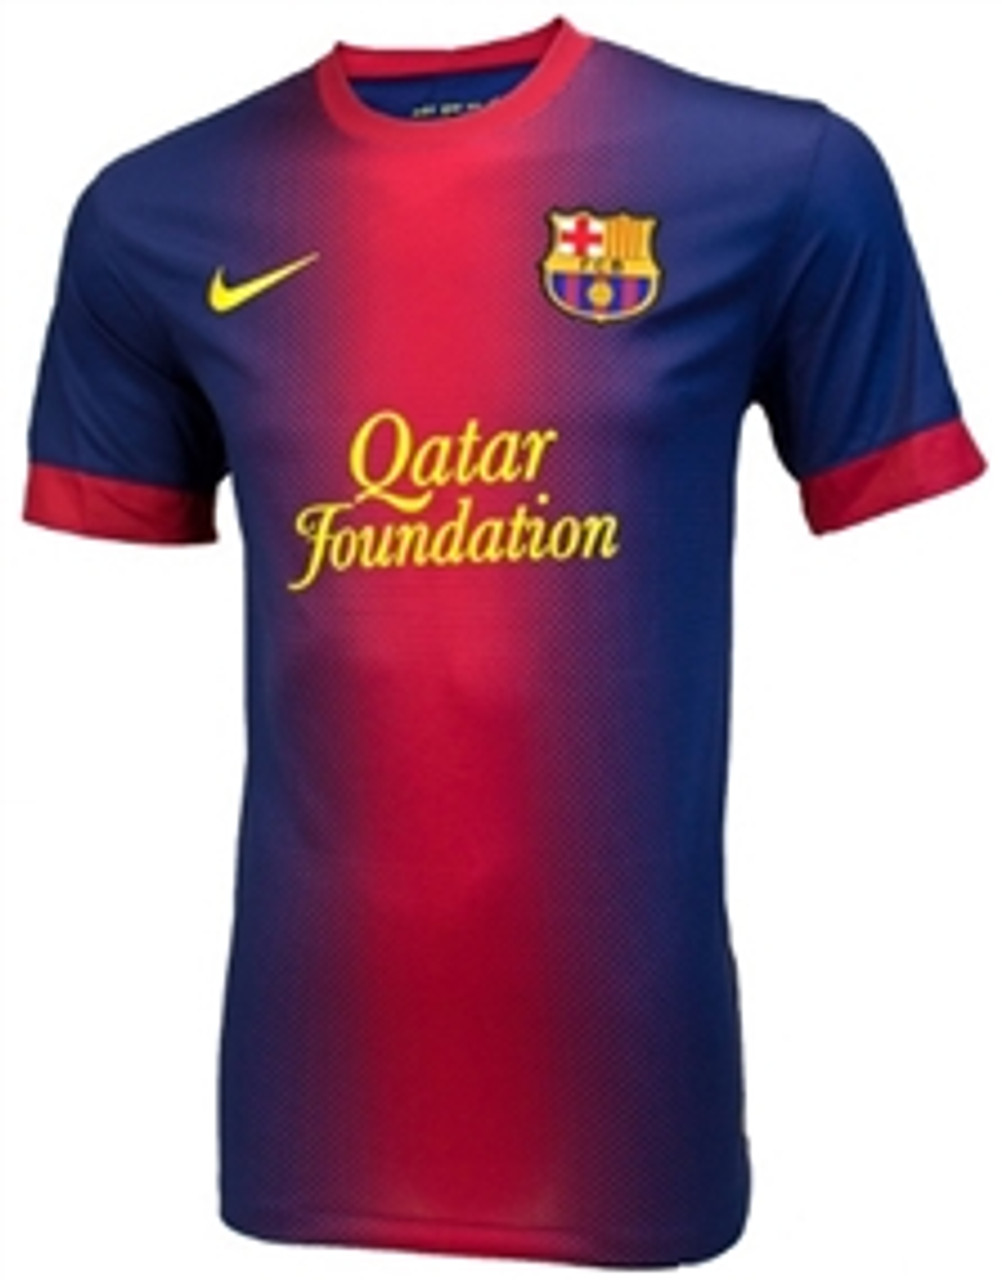 barcelona 2013 jersey